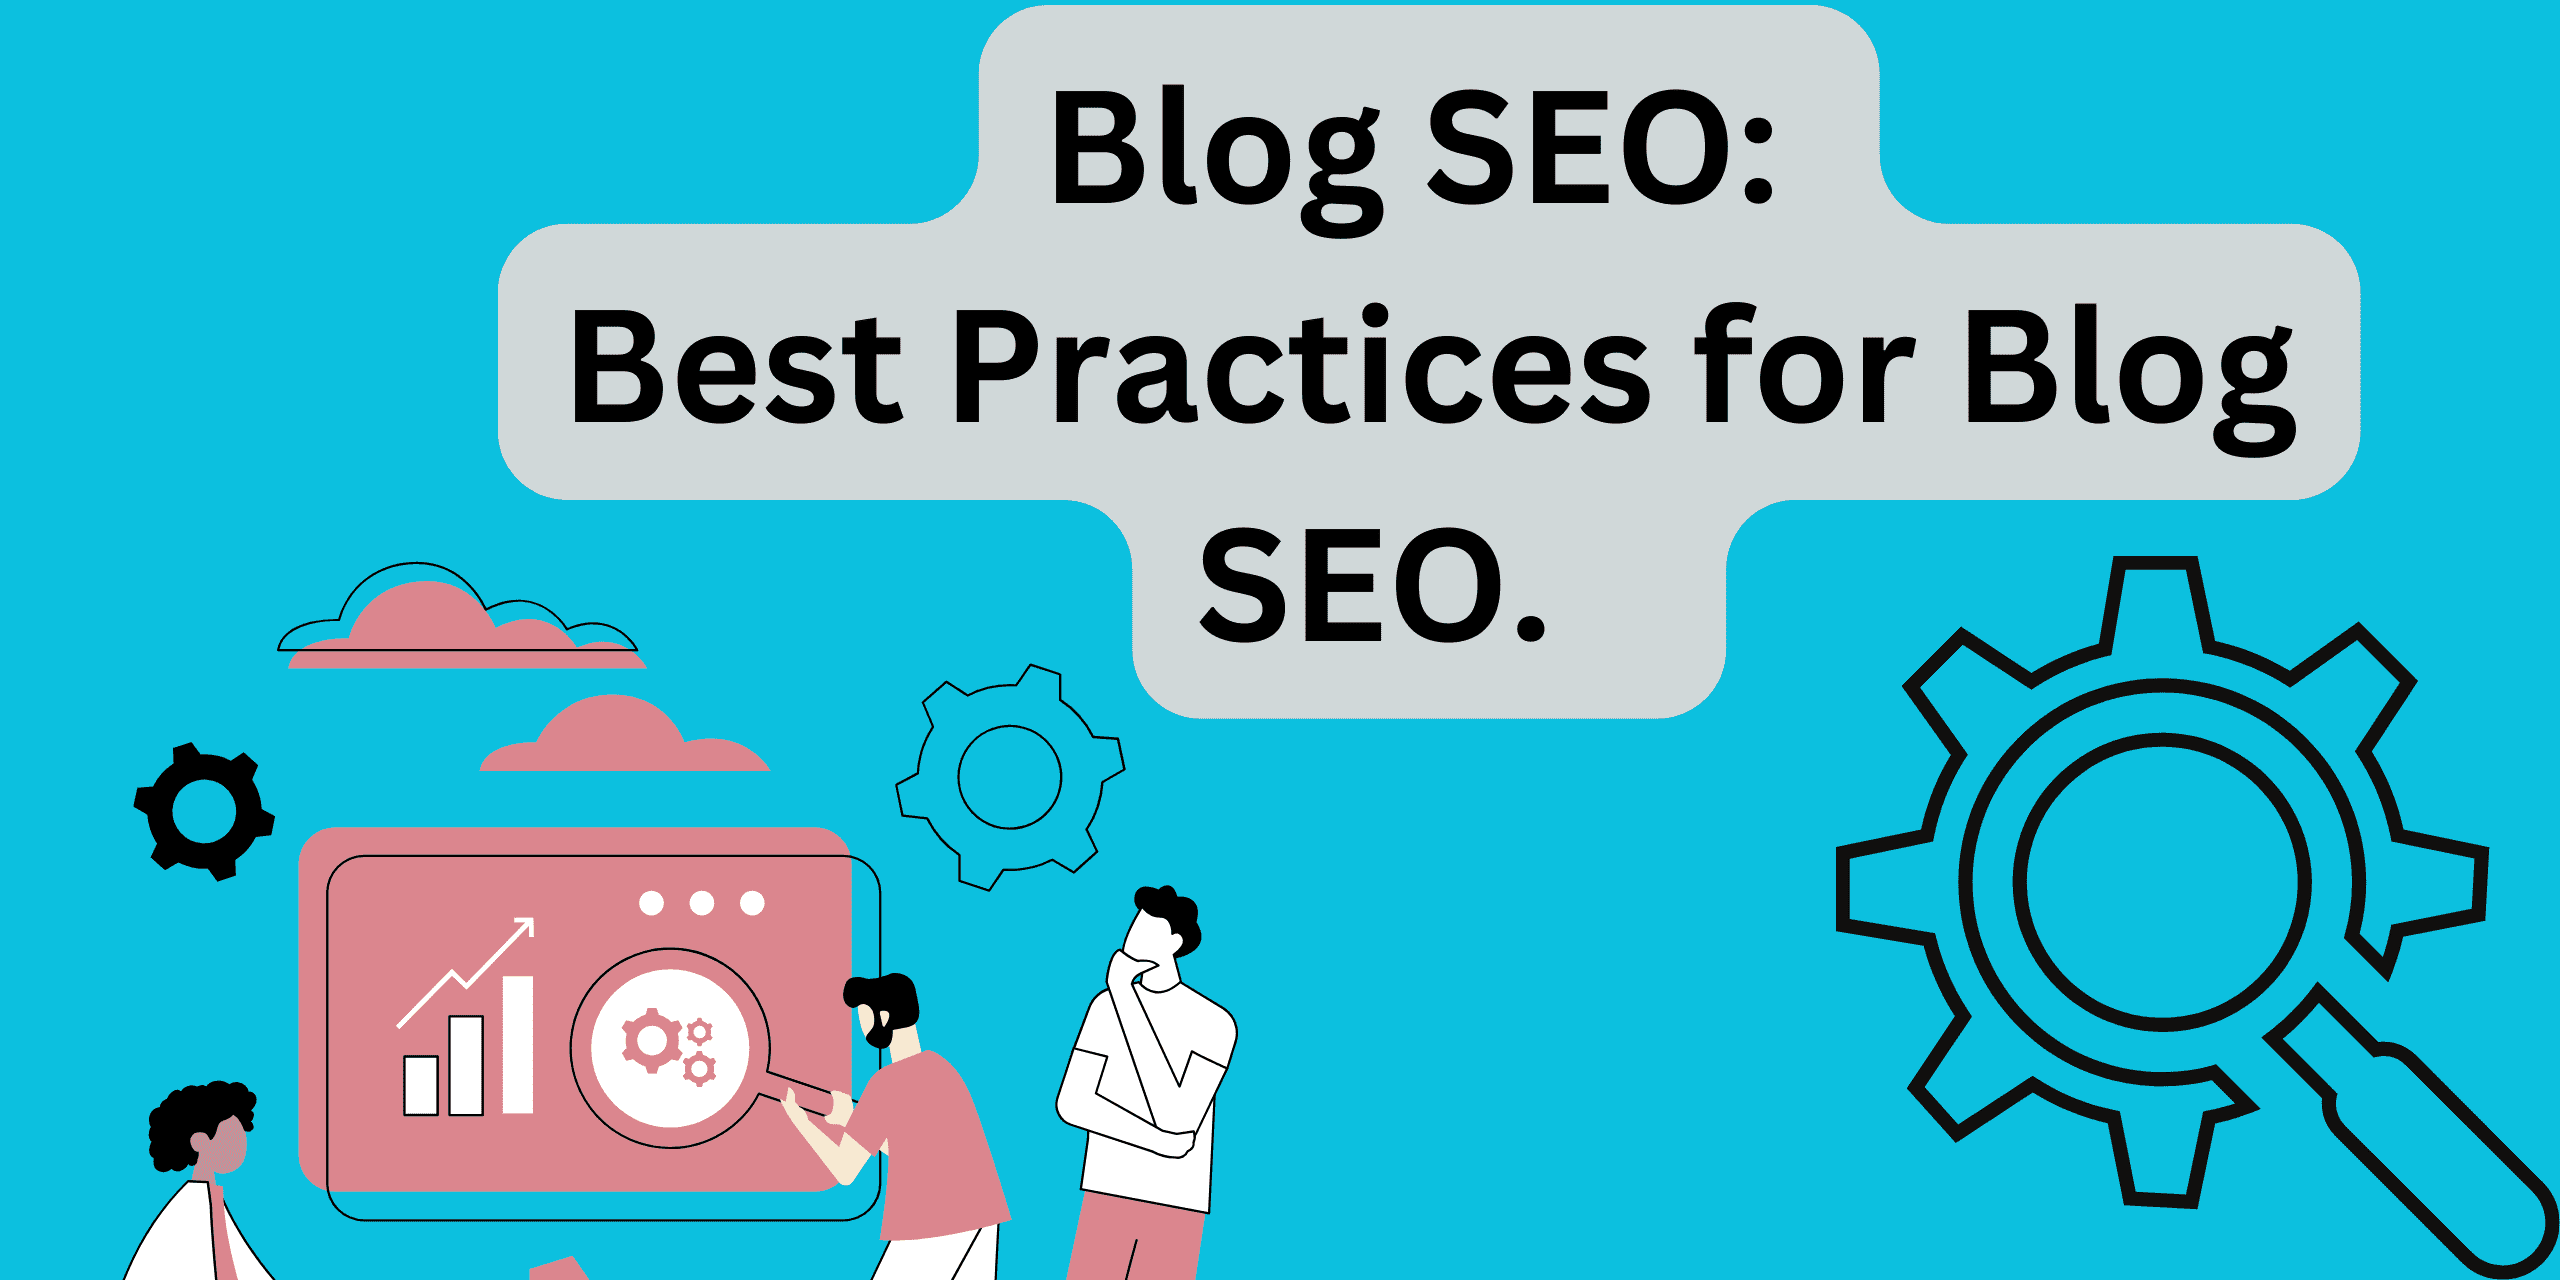 alt"Best practices for blog SEO "